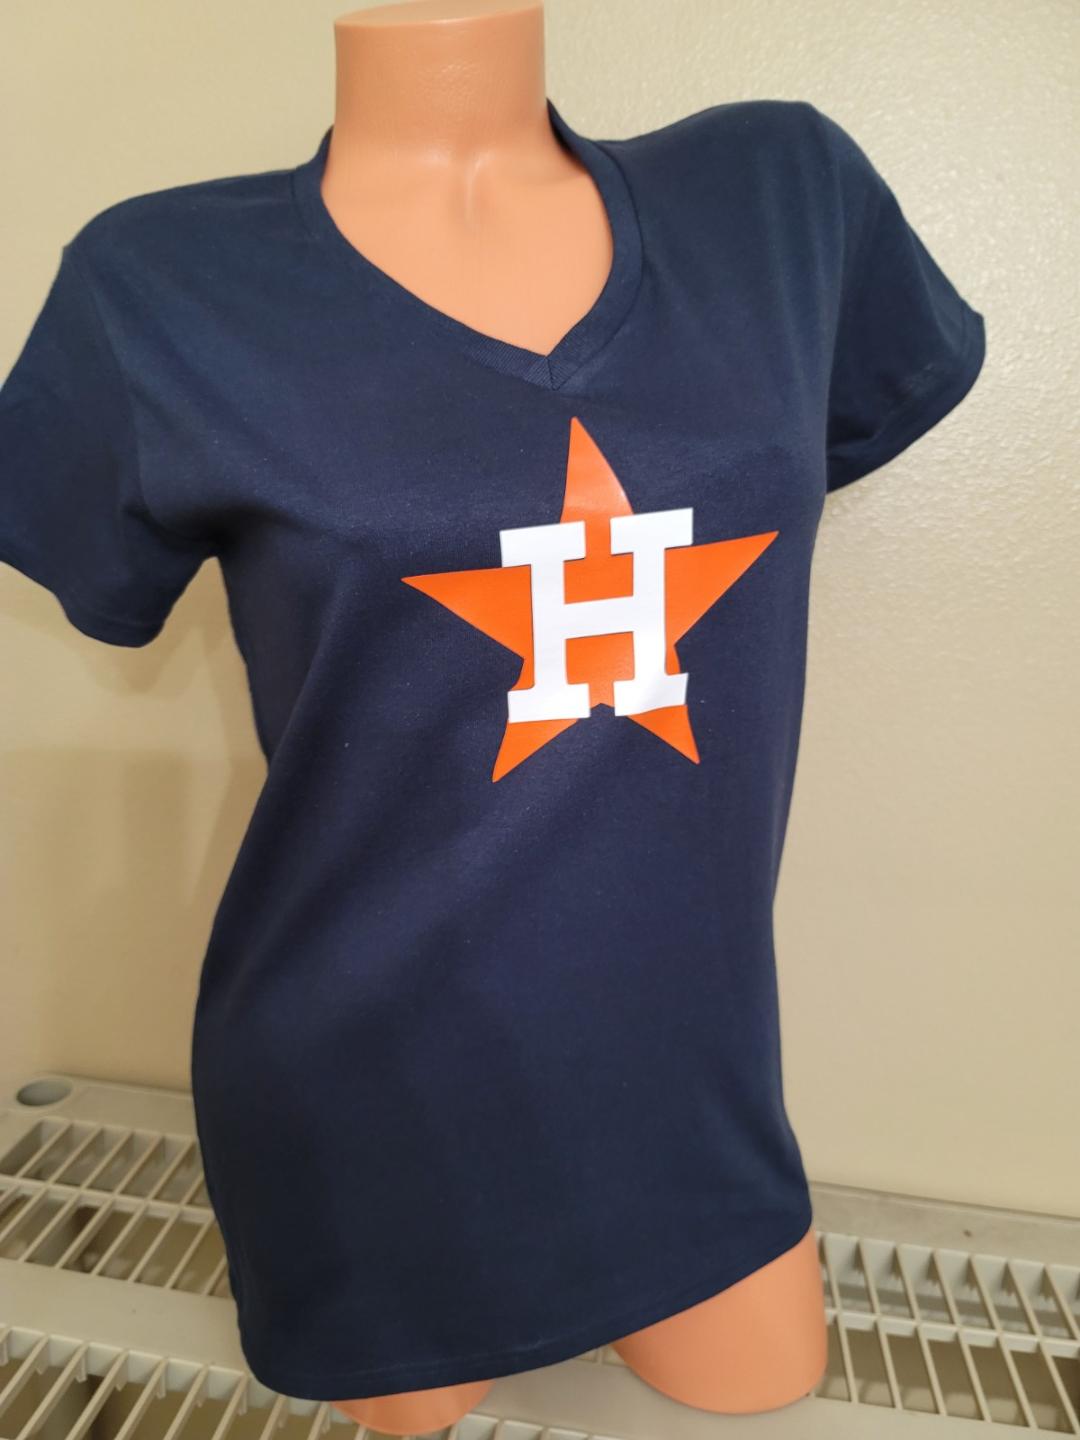 Houston Astros Ladies Apparel, Ladies Astros Clothing, Merchandise